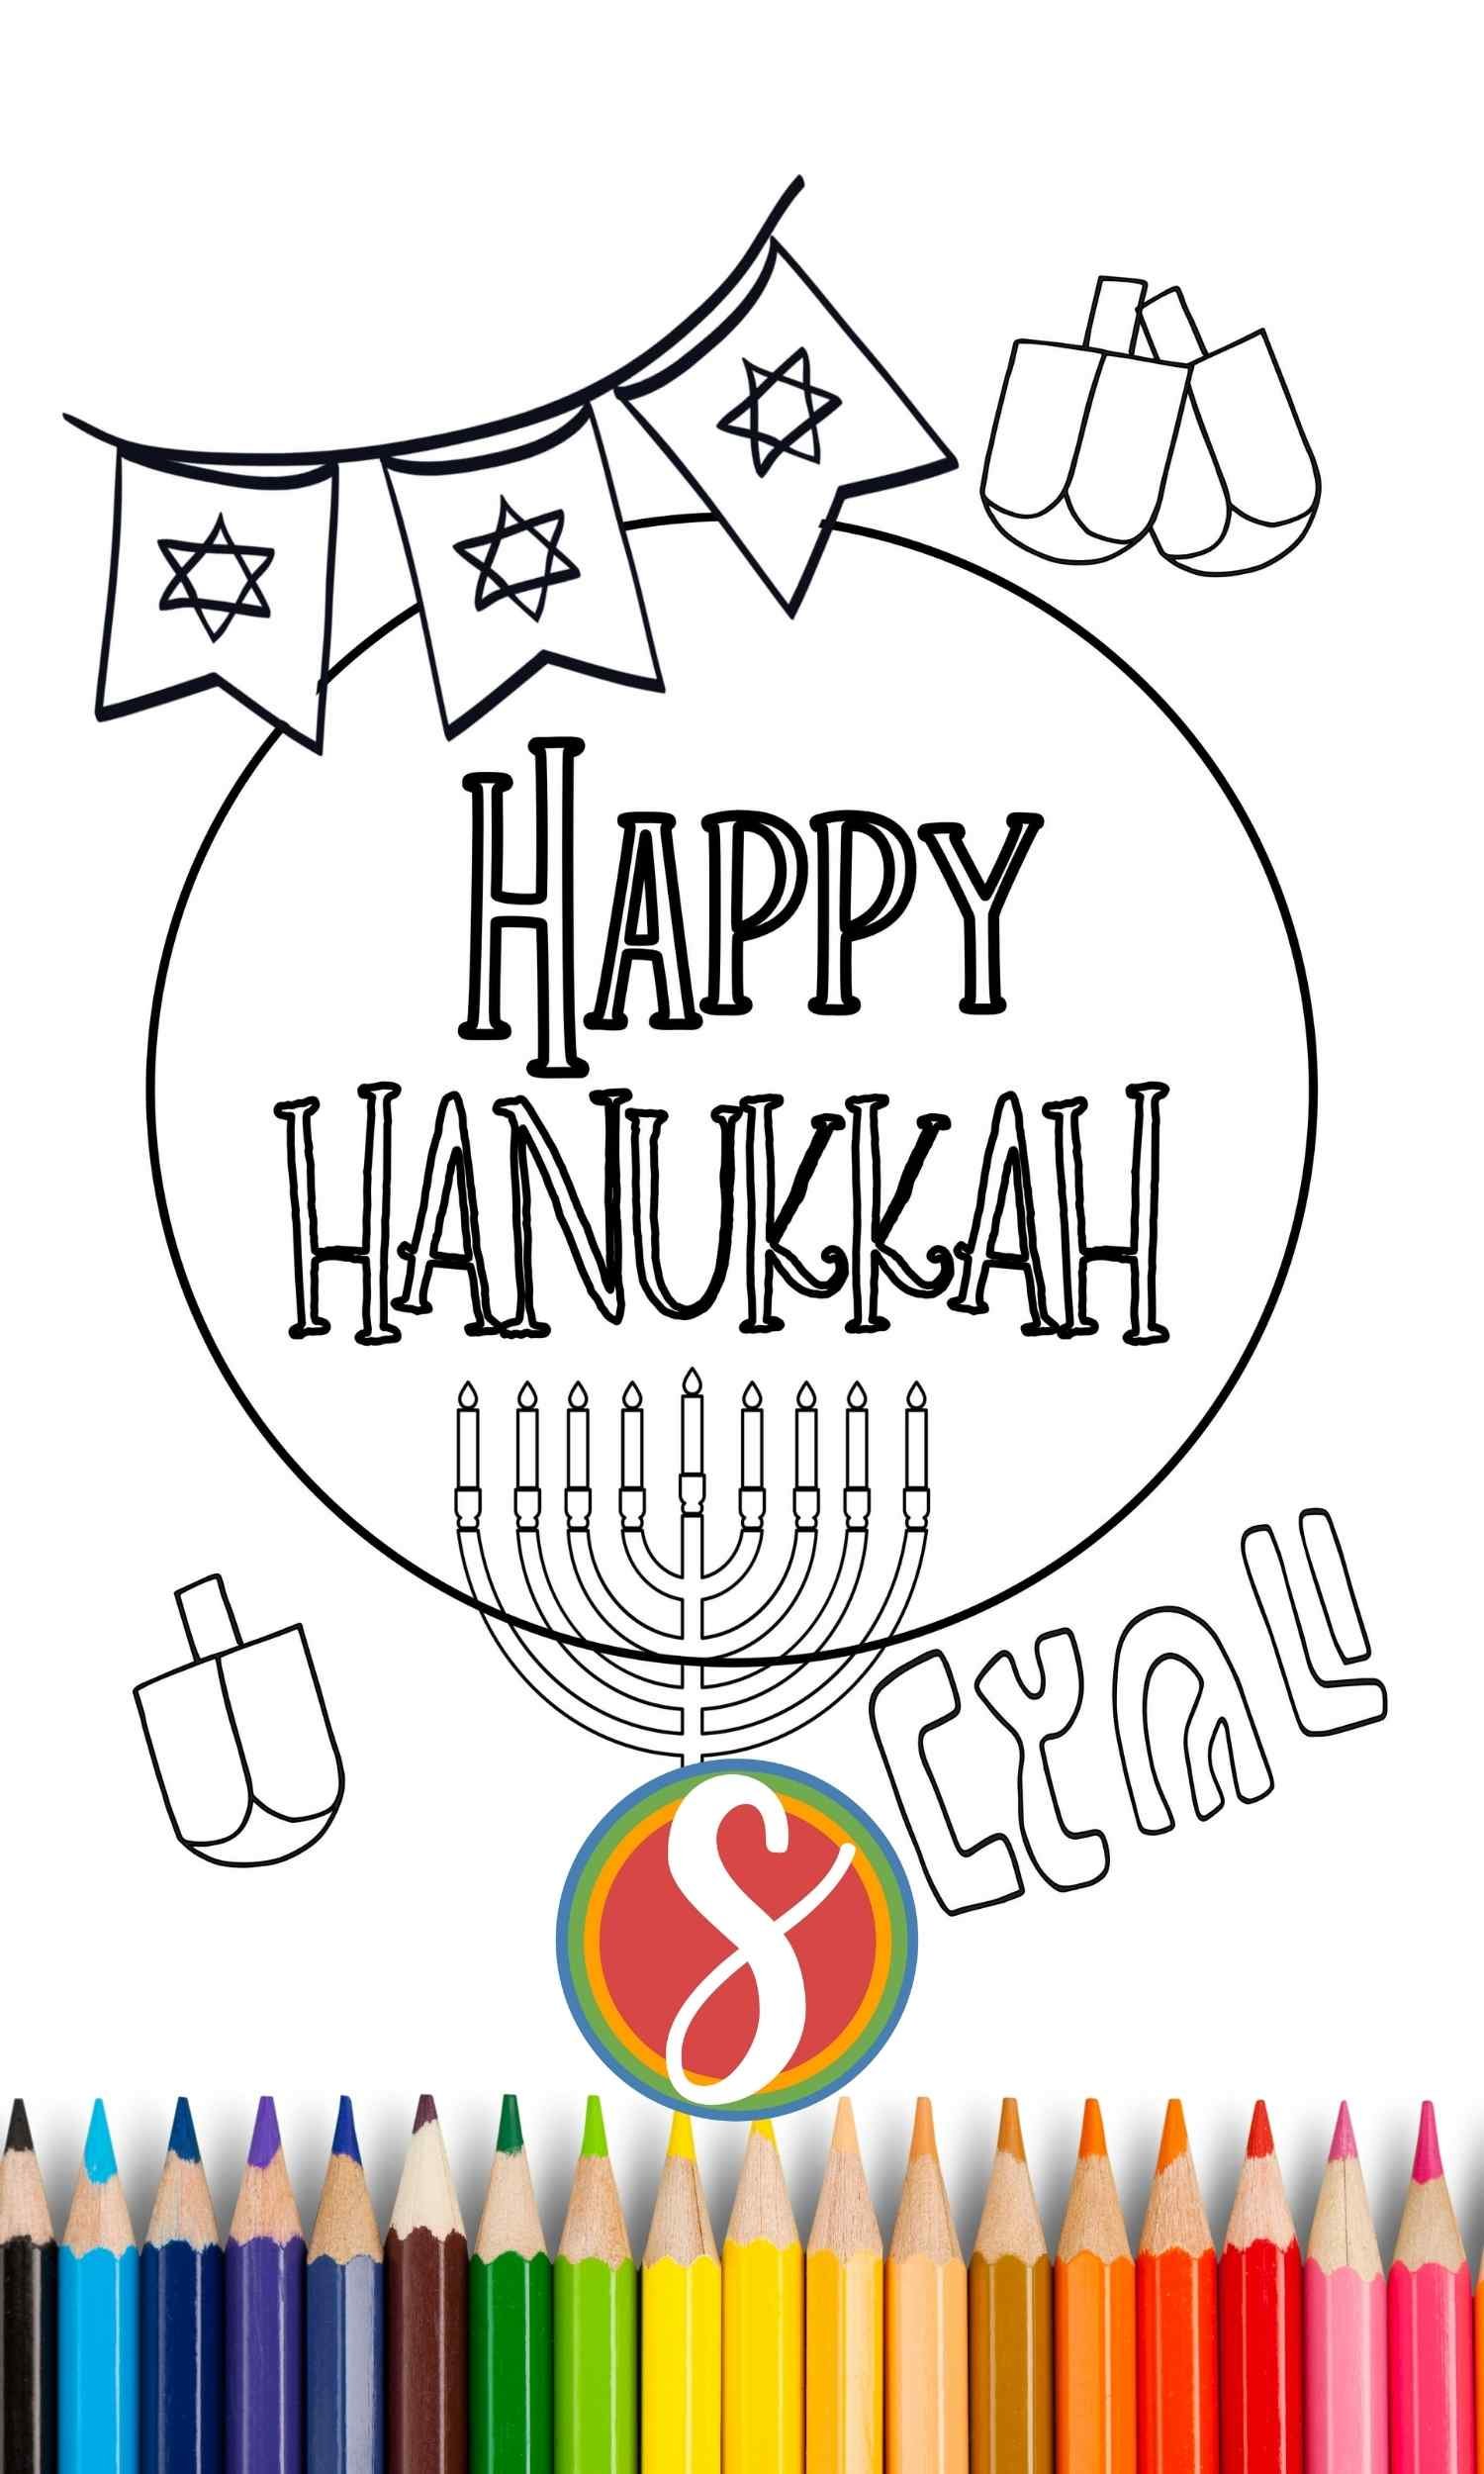 Hanukkah coloring page with a bunch of hanukkah symbols, star of david, dreidels, menorah